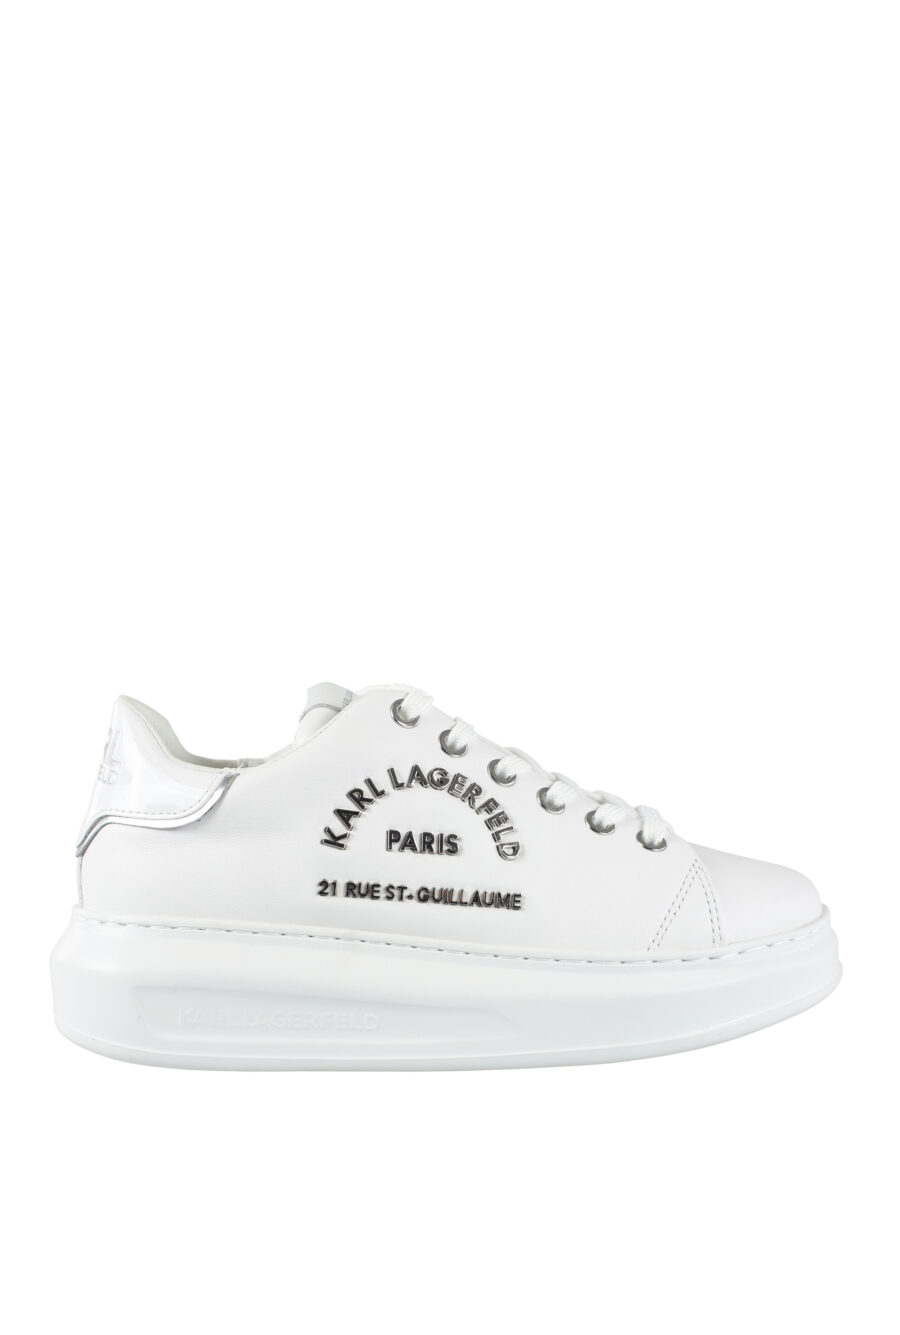 Zapatillas blancas con logo lettering "rue st guillaume" plateado - IMG 9566 1